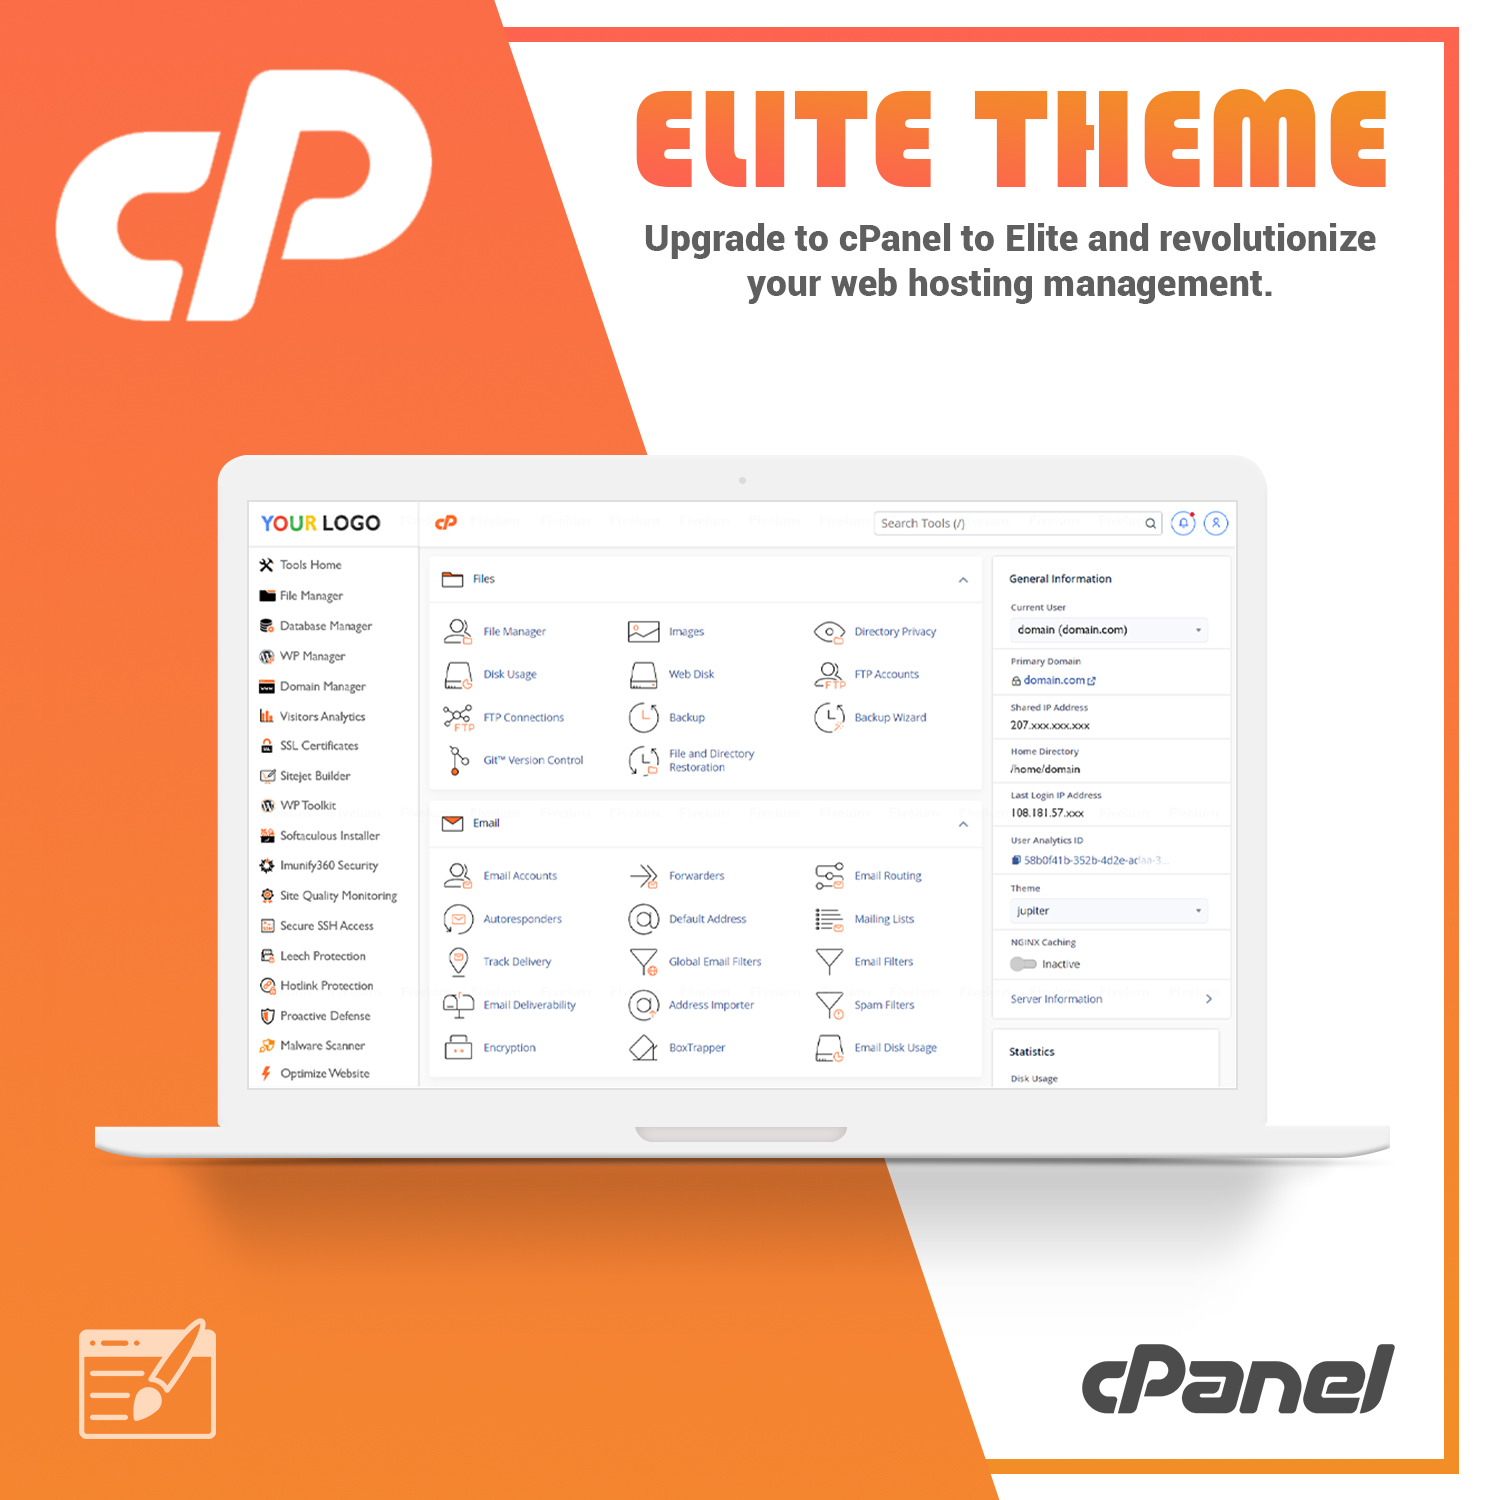 cPanel Elite Theme - The Premium cPanel Interface Style Download